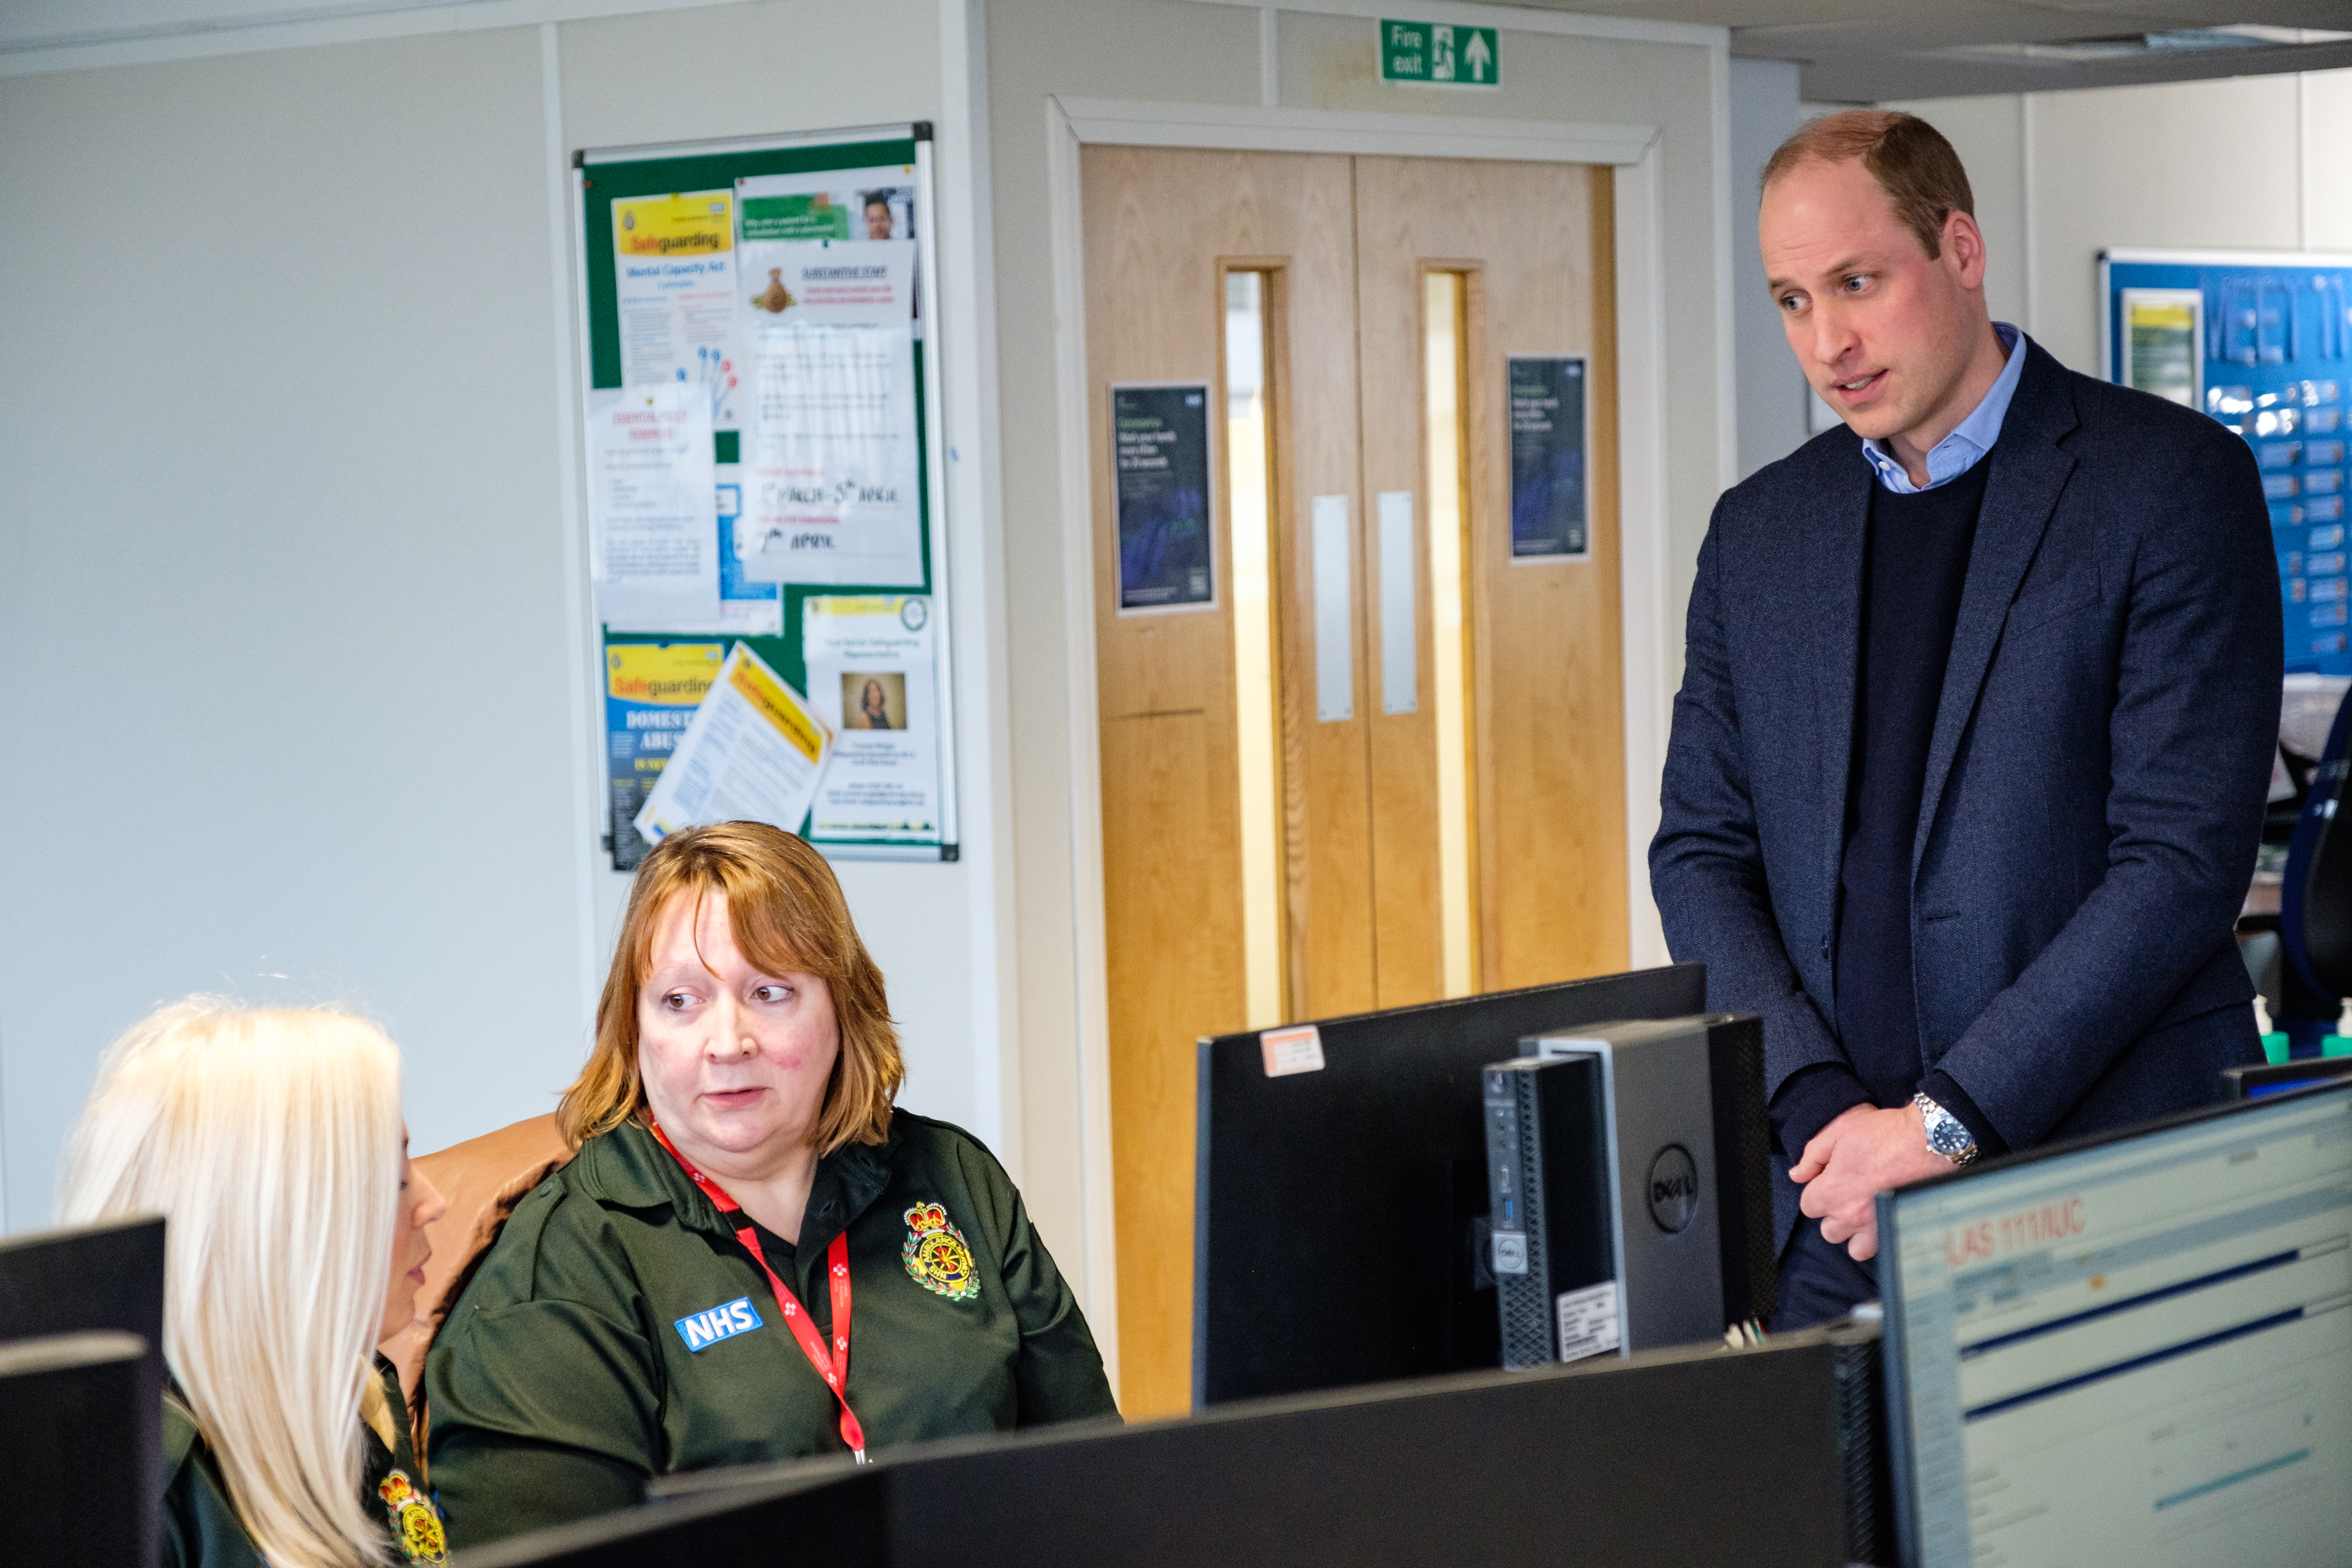 The Duke and Duchess of Cambridge visit the London Ambulance Centre in Croydon.